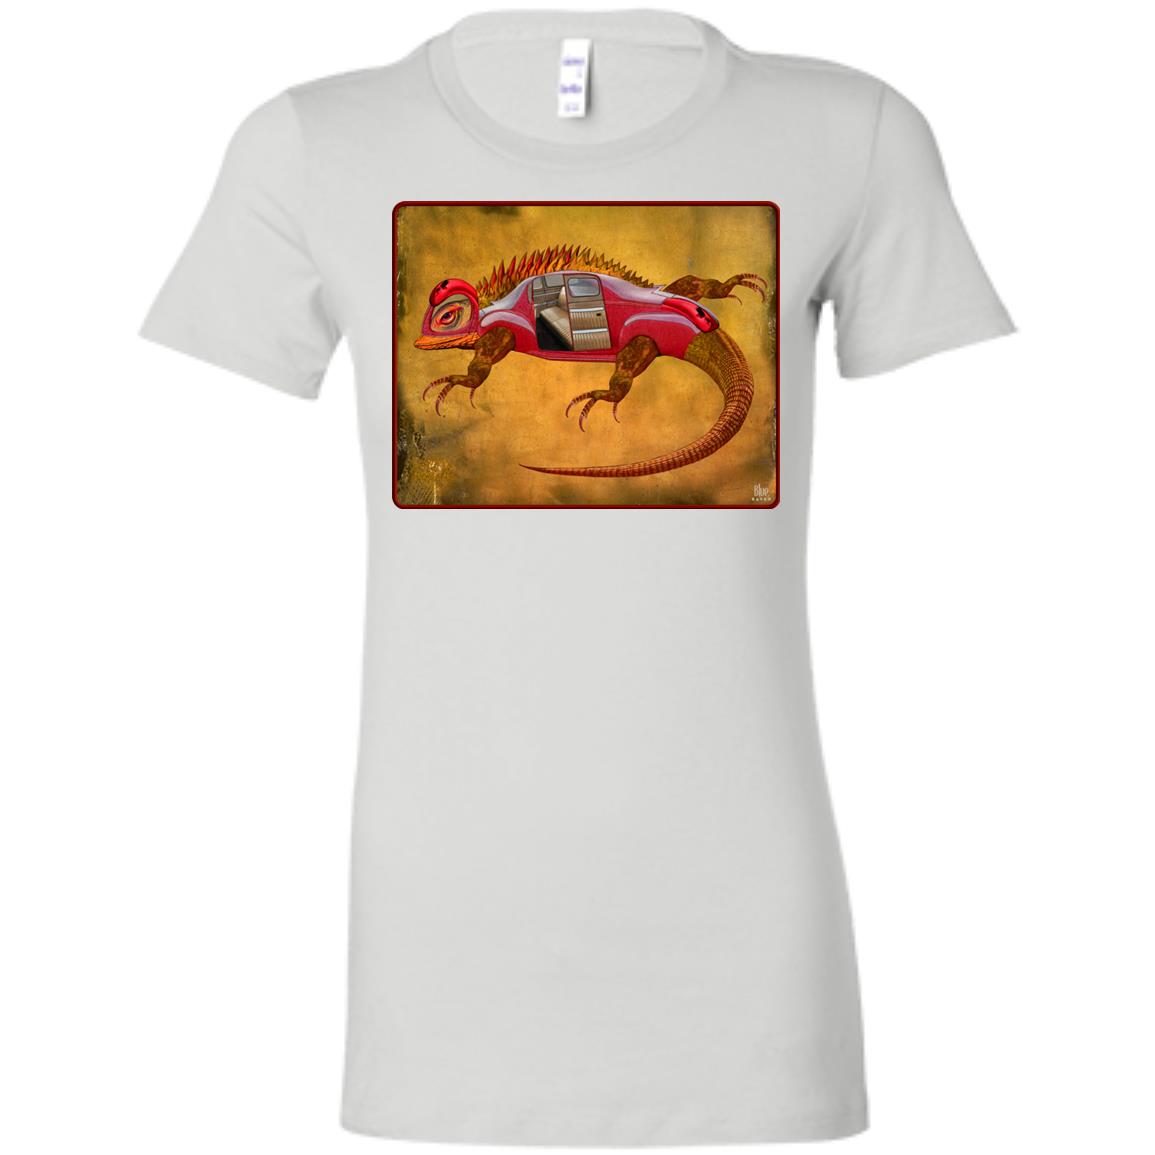 Uber Lizard - red - Women's Fitted T-Shirt